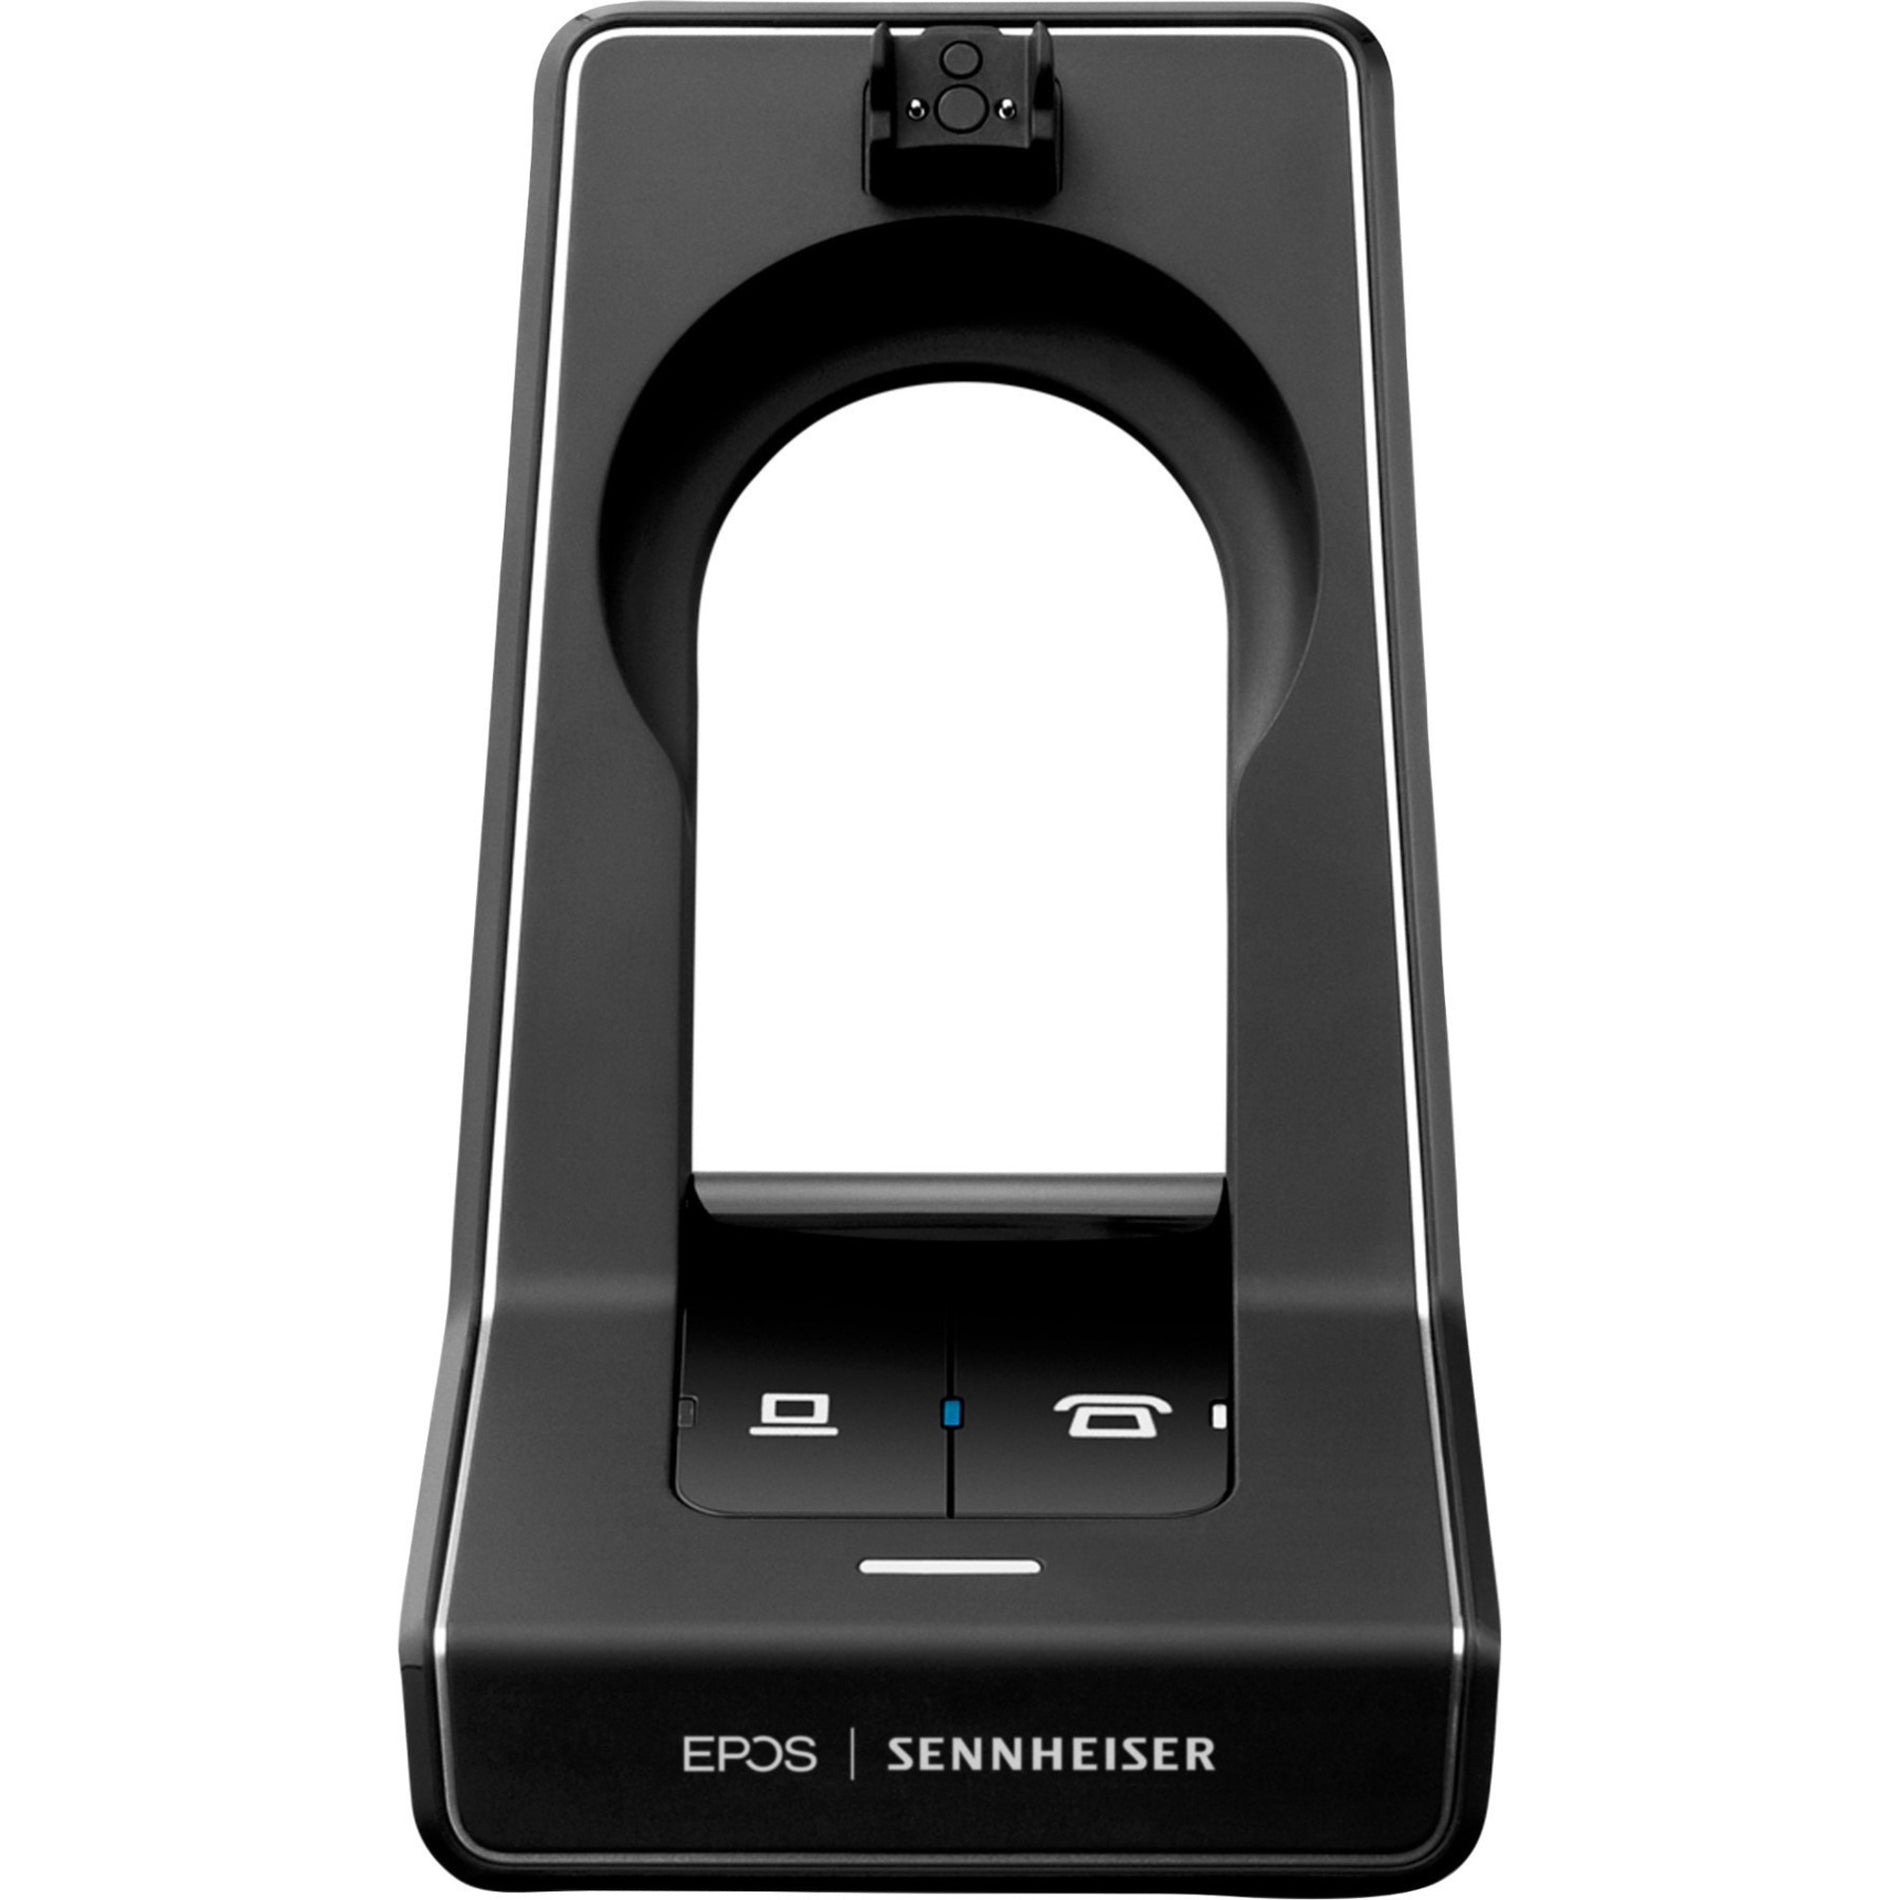 EPOS | SENNHEISER 1000700 Headset Base Station, DECT Wireless Technology, Black